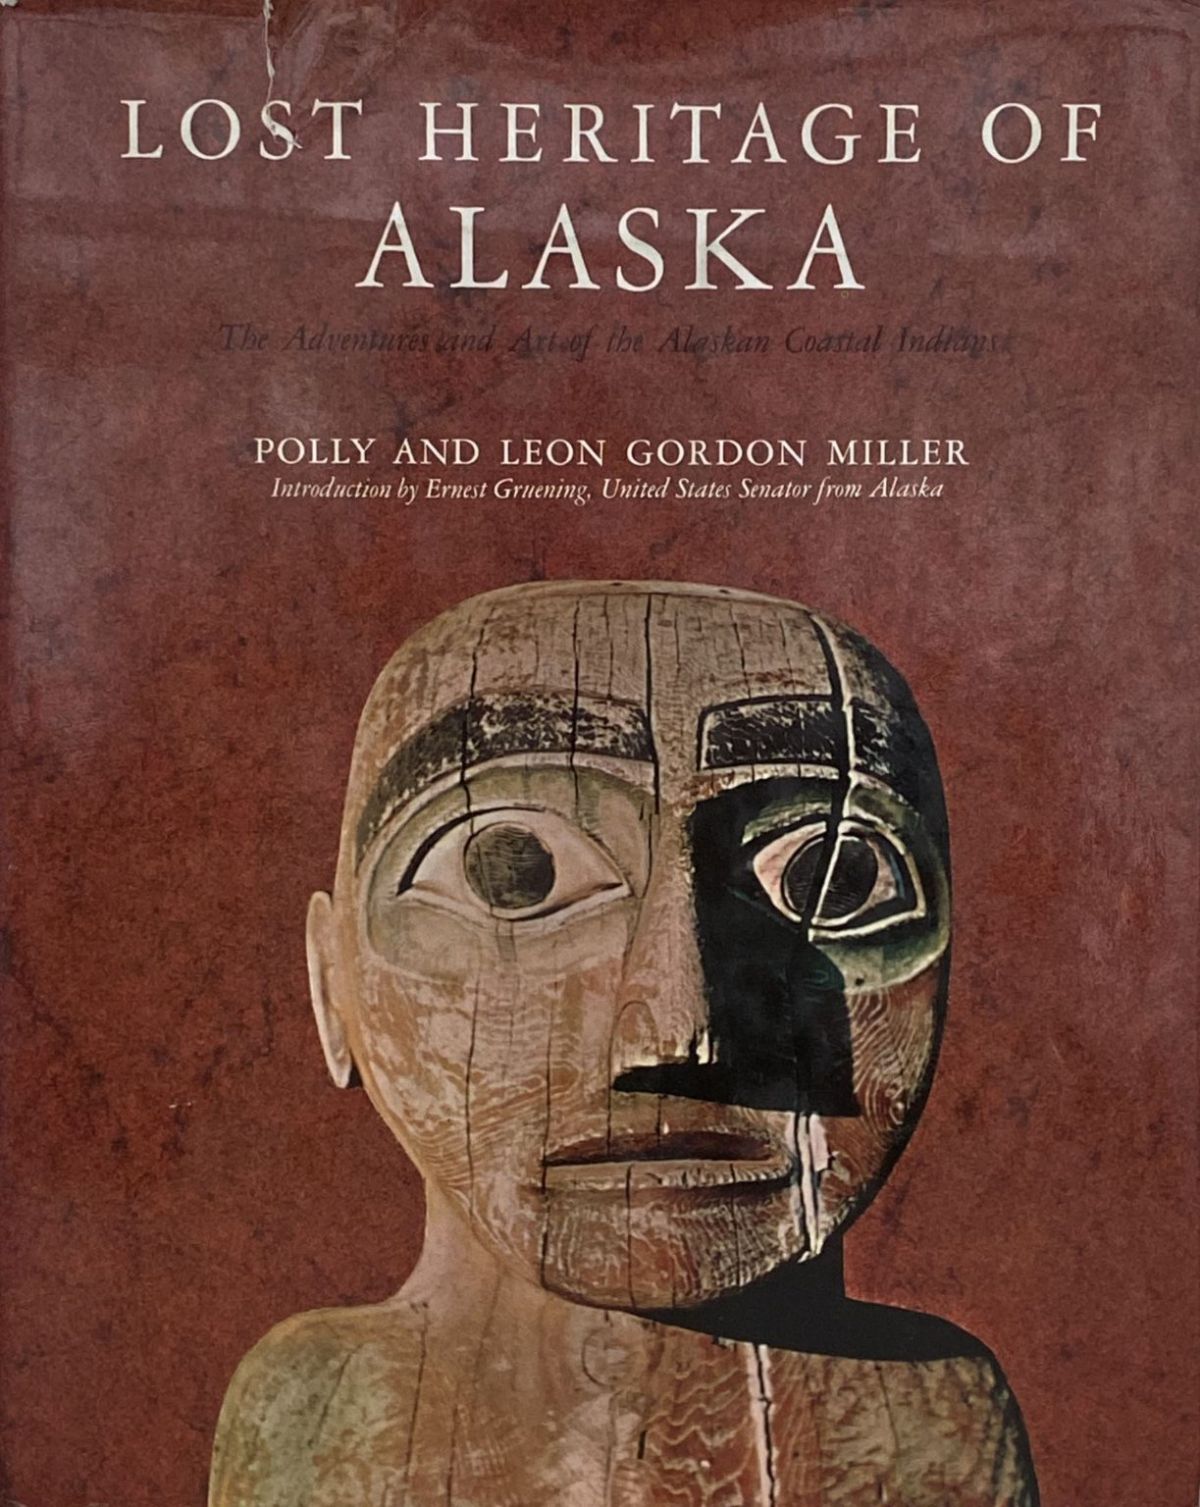 LOST HERITAGE OF ALASKA: The Adventures And Art Of The Alaskan Coastal Indians